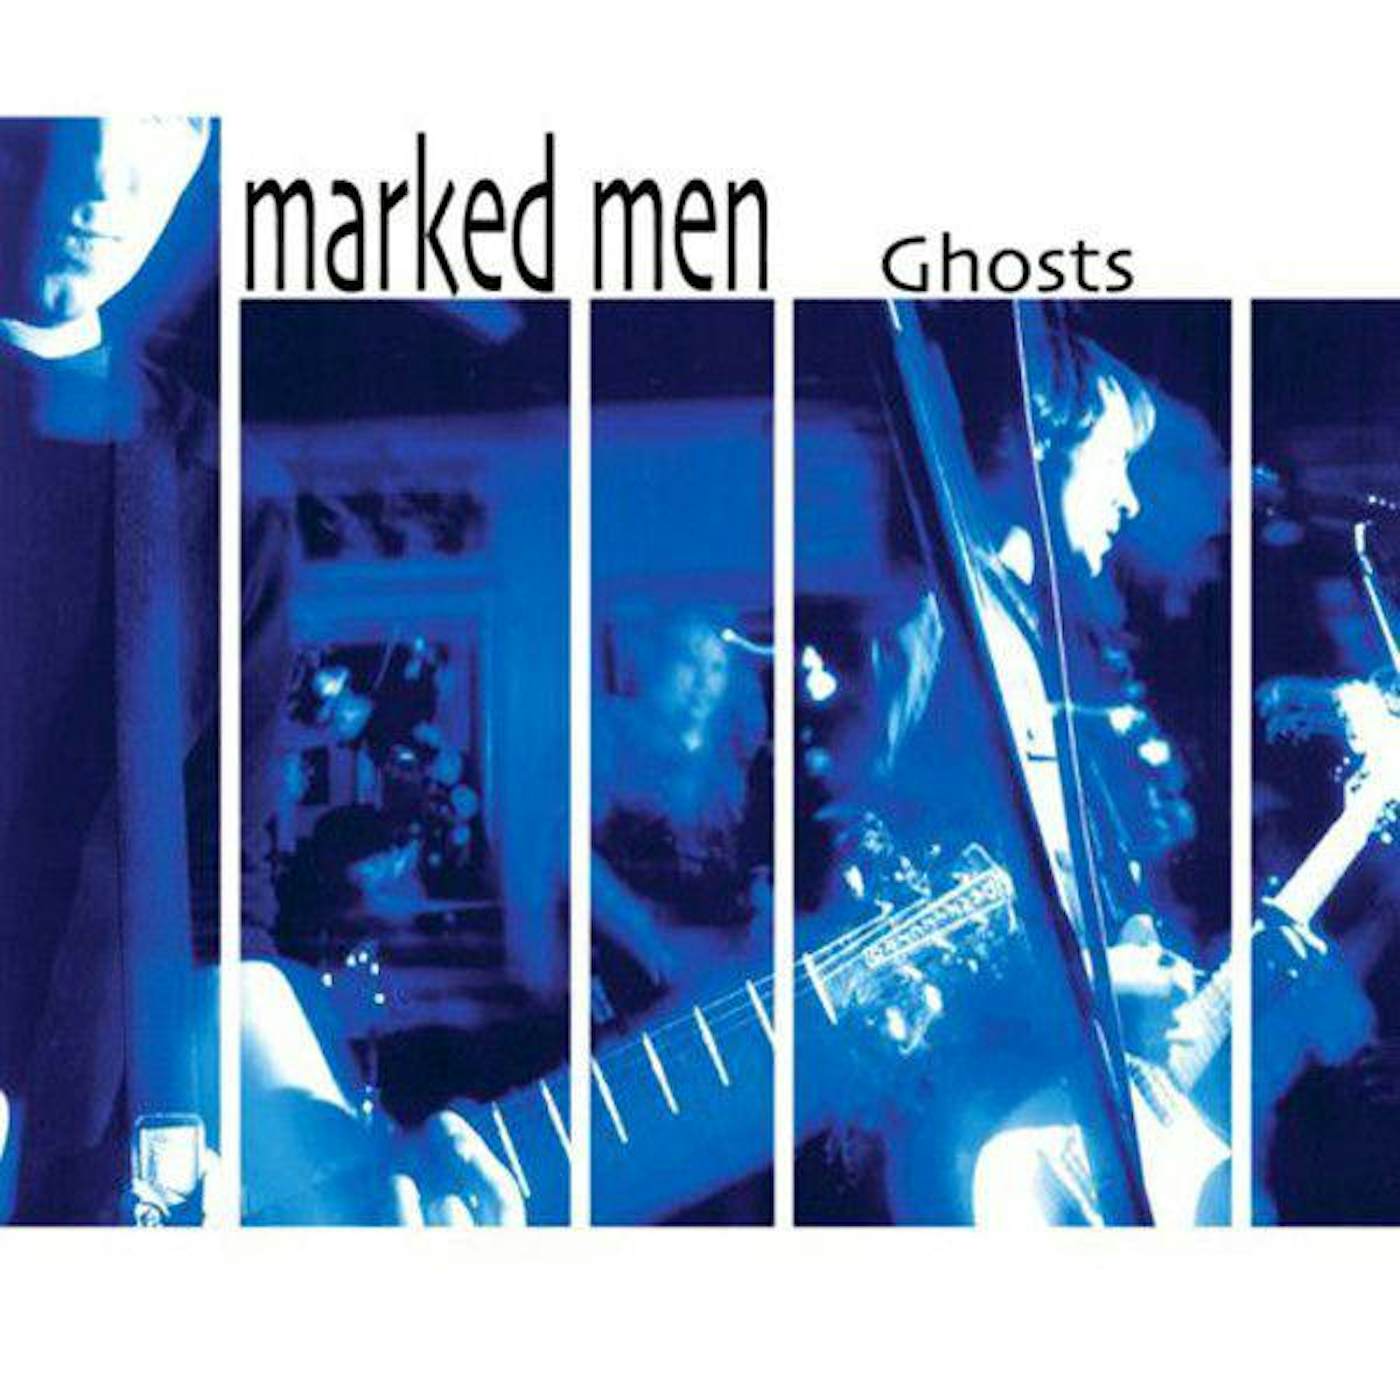 Marked Men Ghosts Vinyl Record